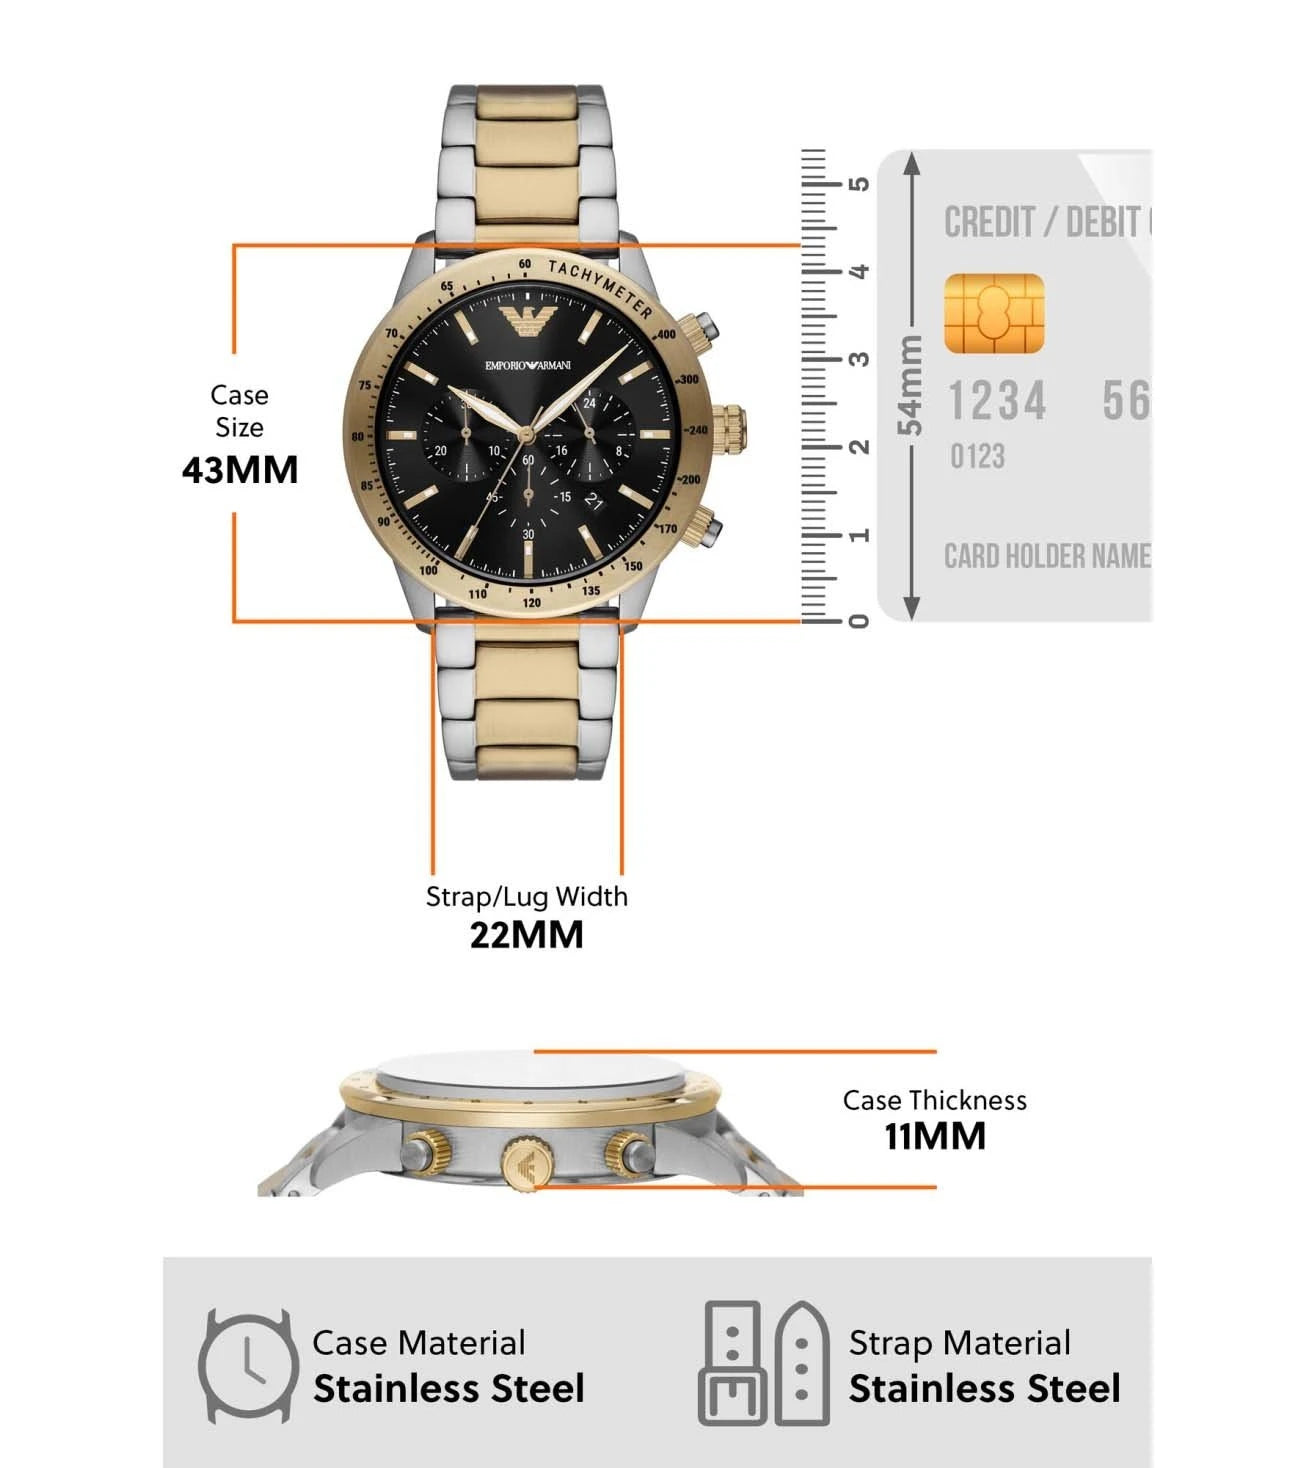 AR11521 | EMPORIO ARMANI Chronograph Watch for Men ‌